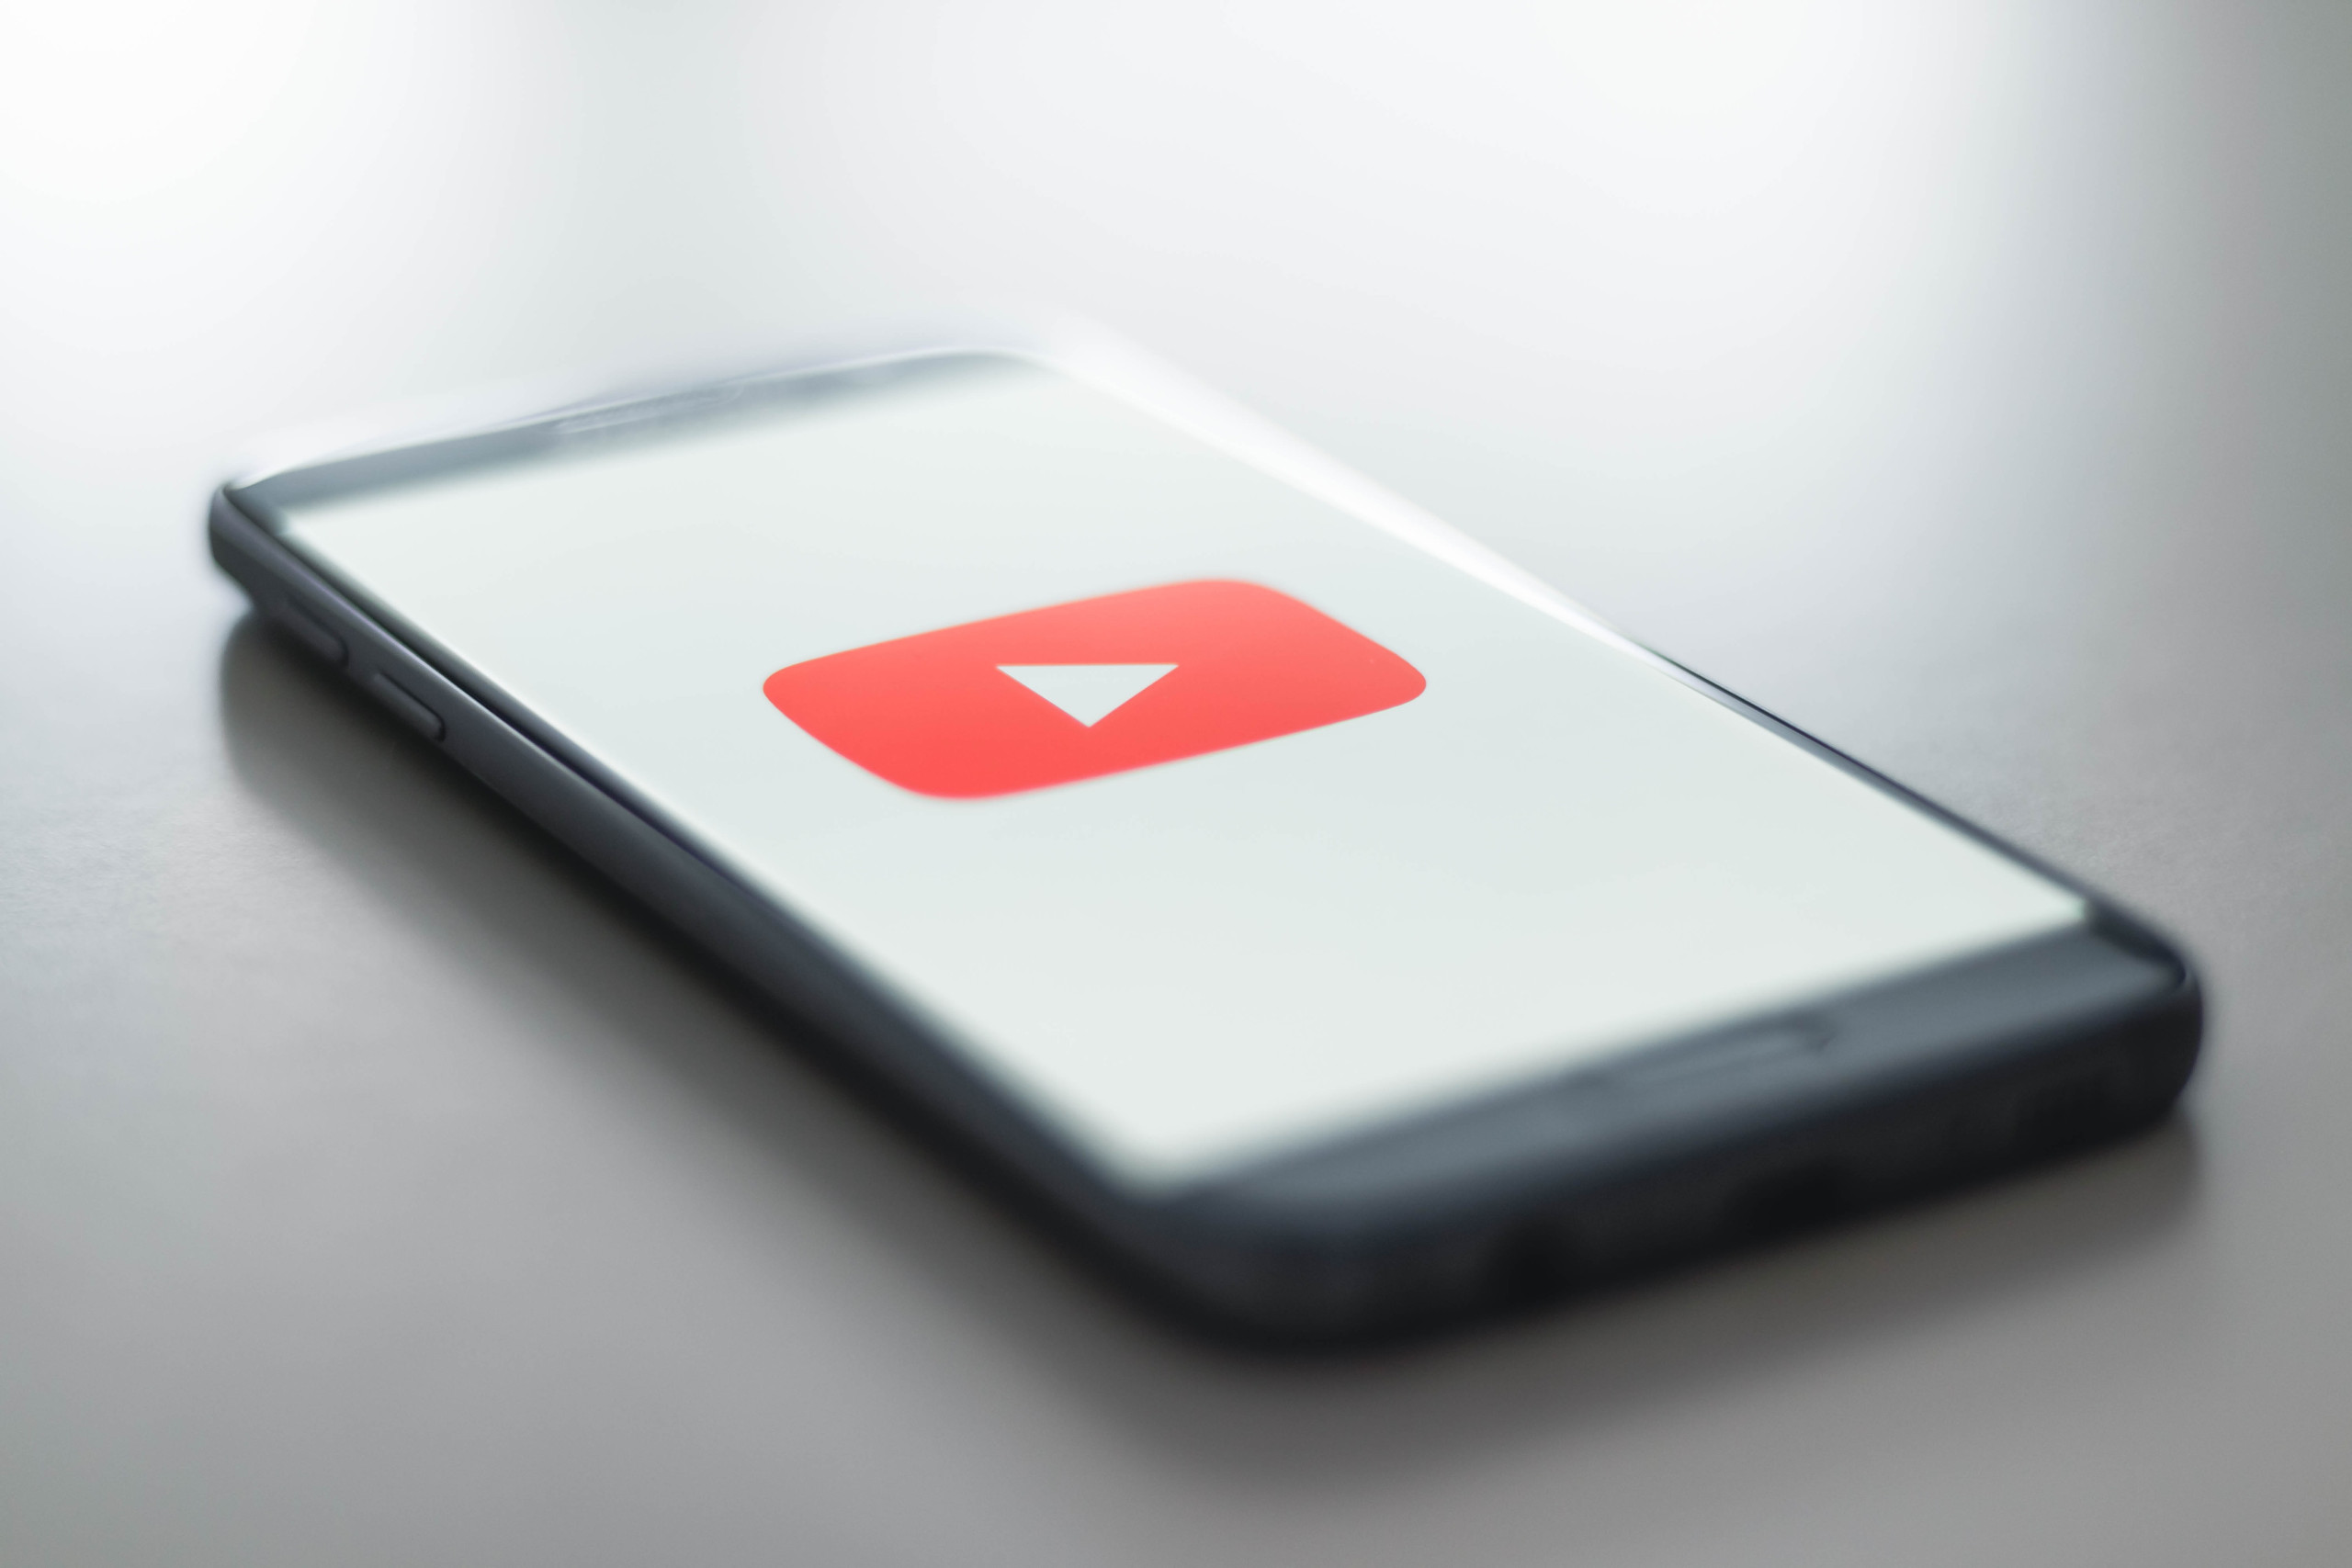 O YouTube deixará restrito os vídeos em alta qualidade (4K) só para assinantes?